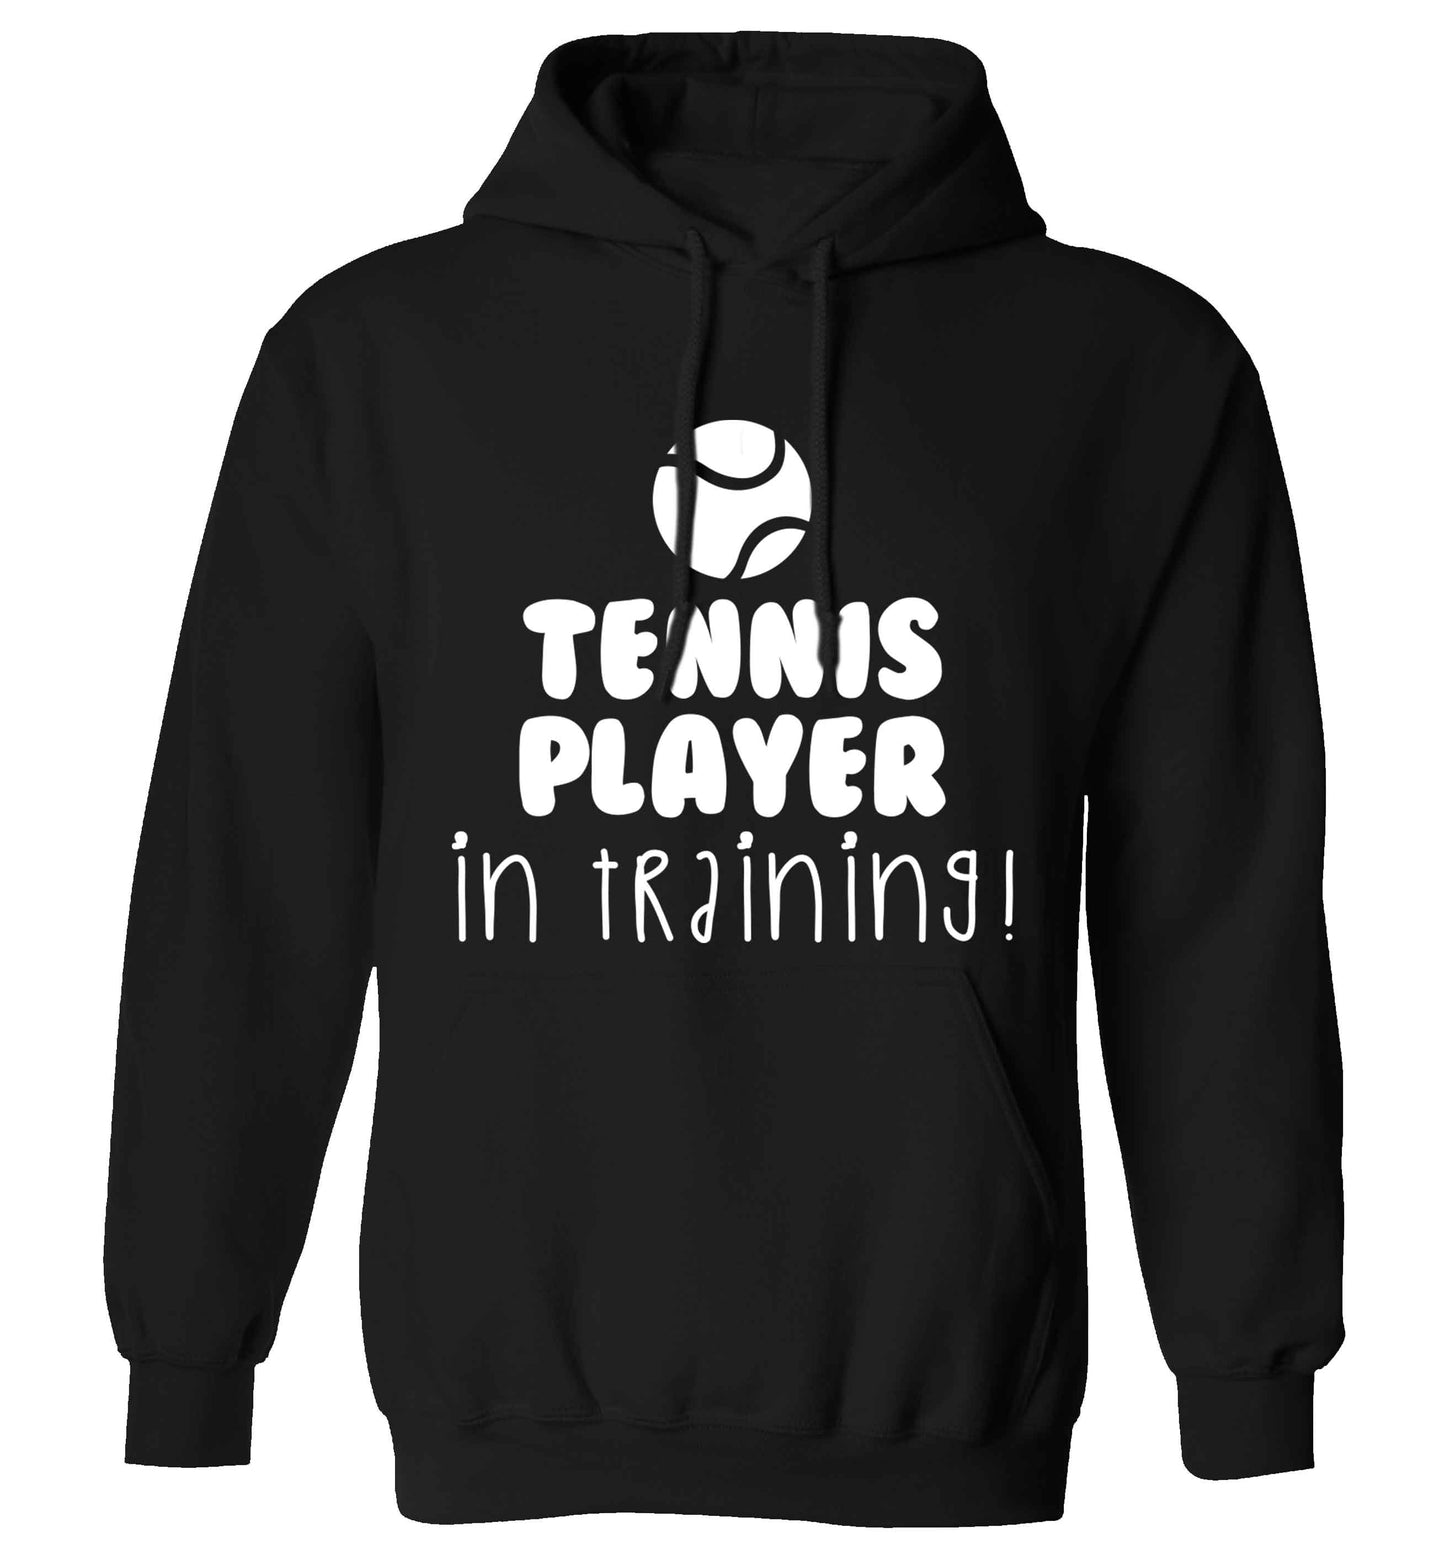 Tennis player in training adults unisex black hoodie 2XL